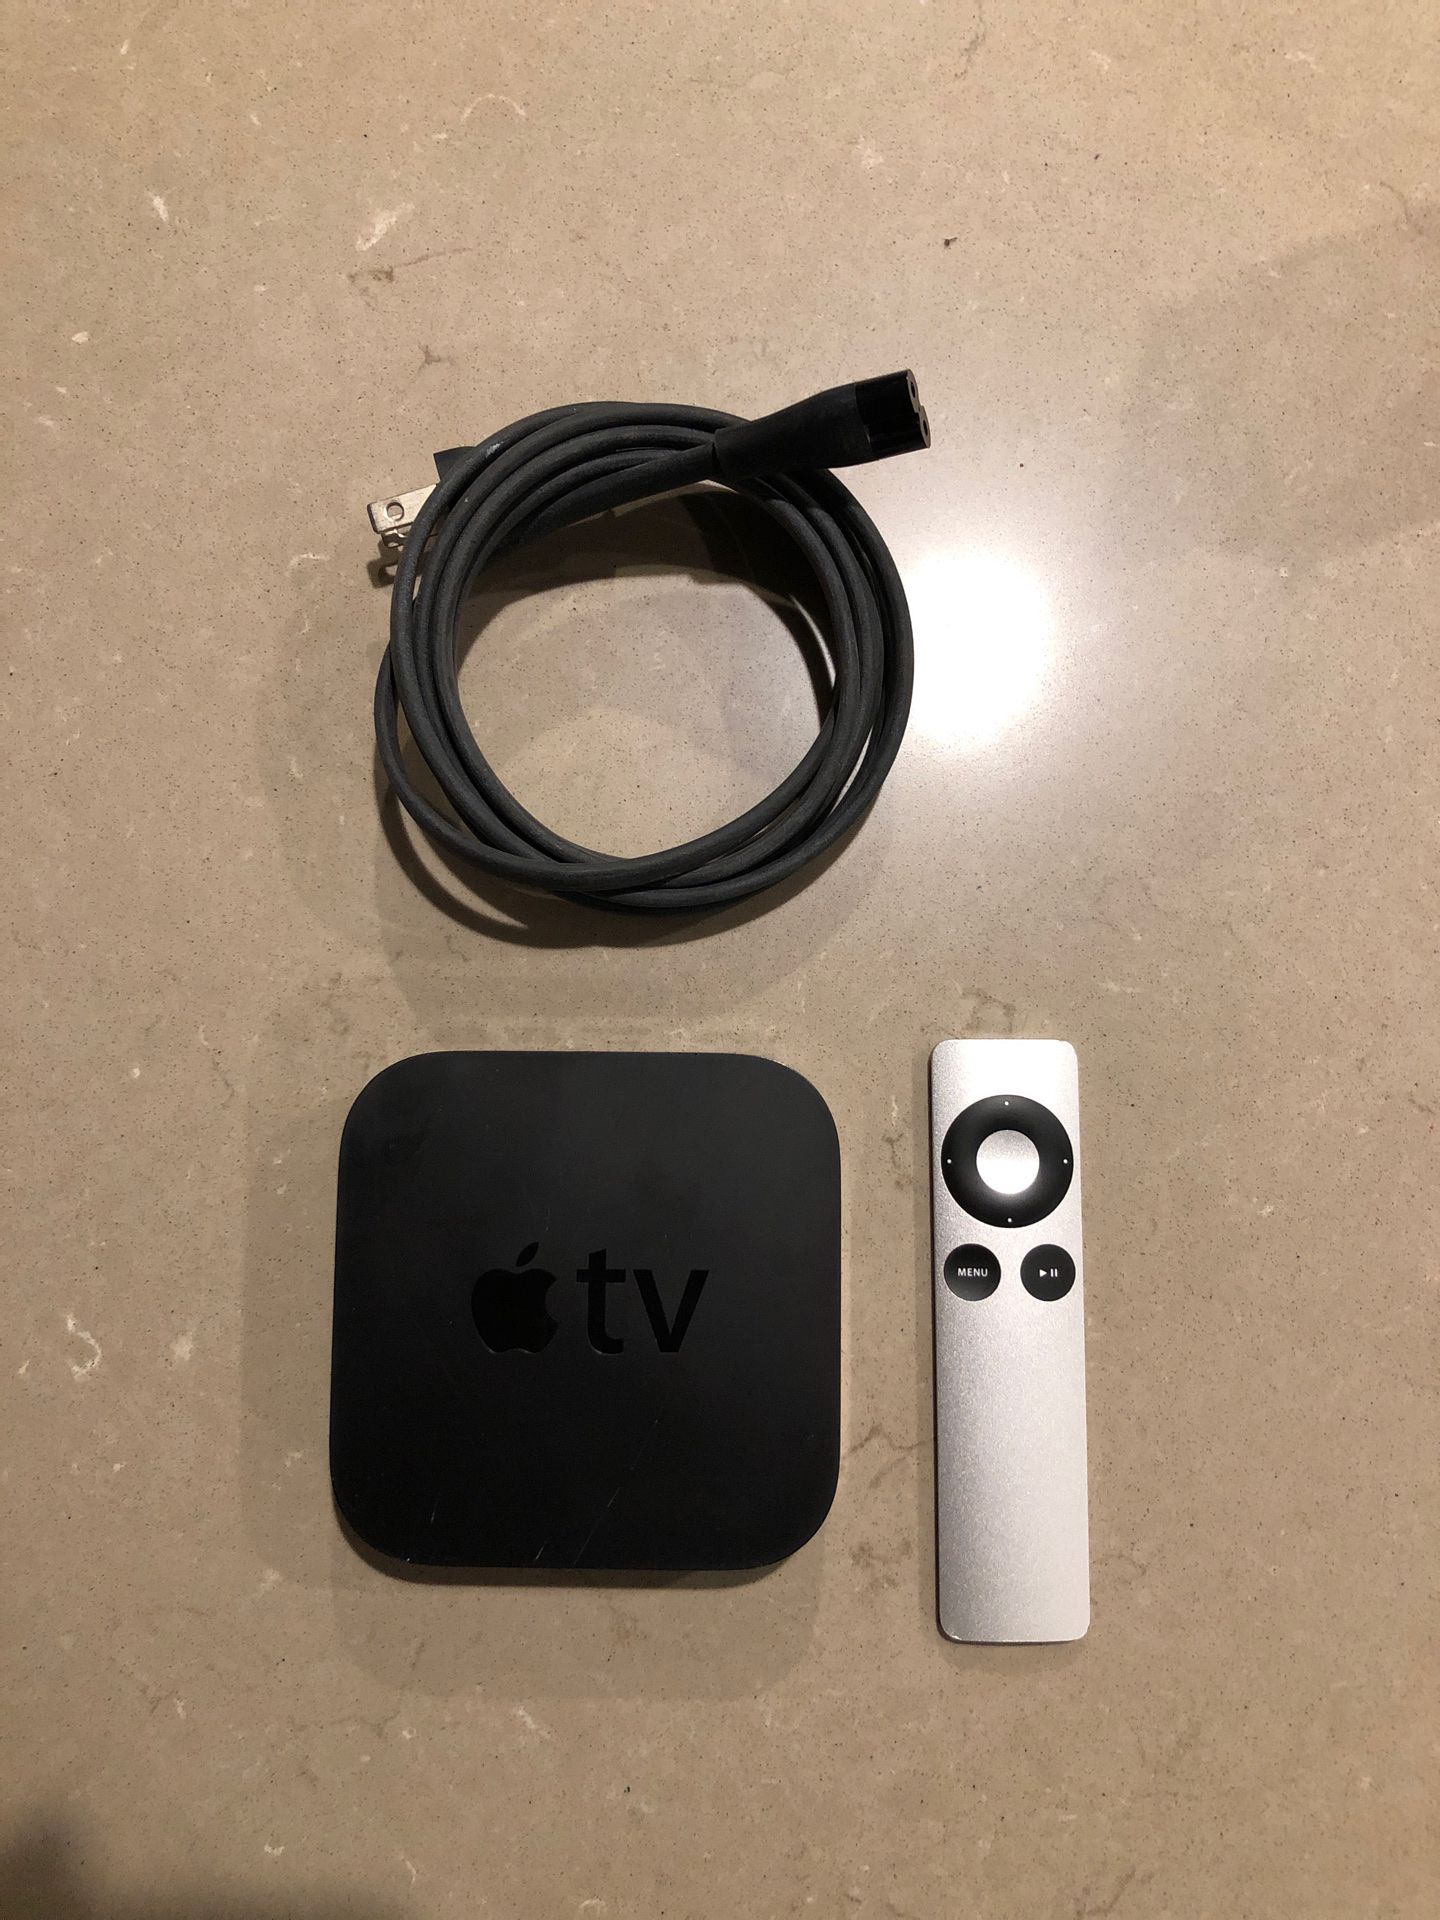 Apple tv 2nd generation